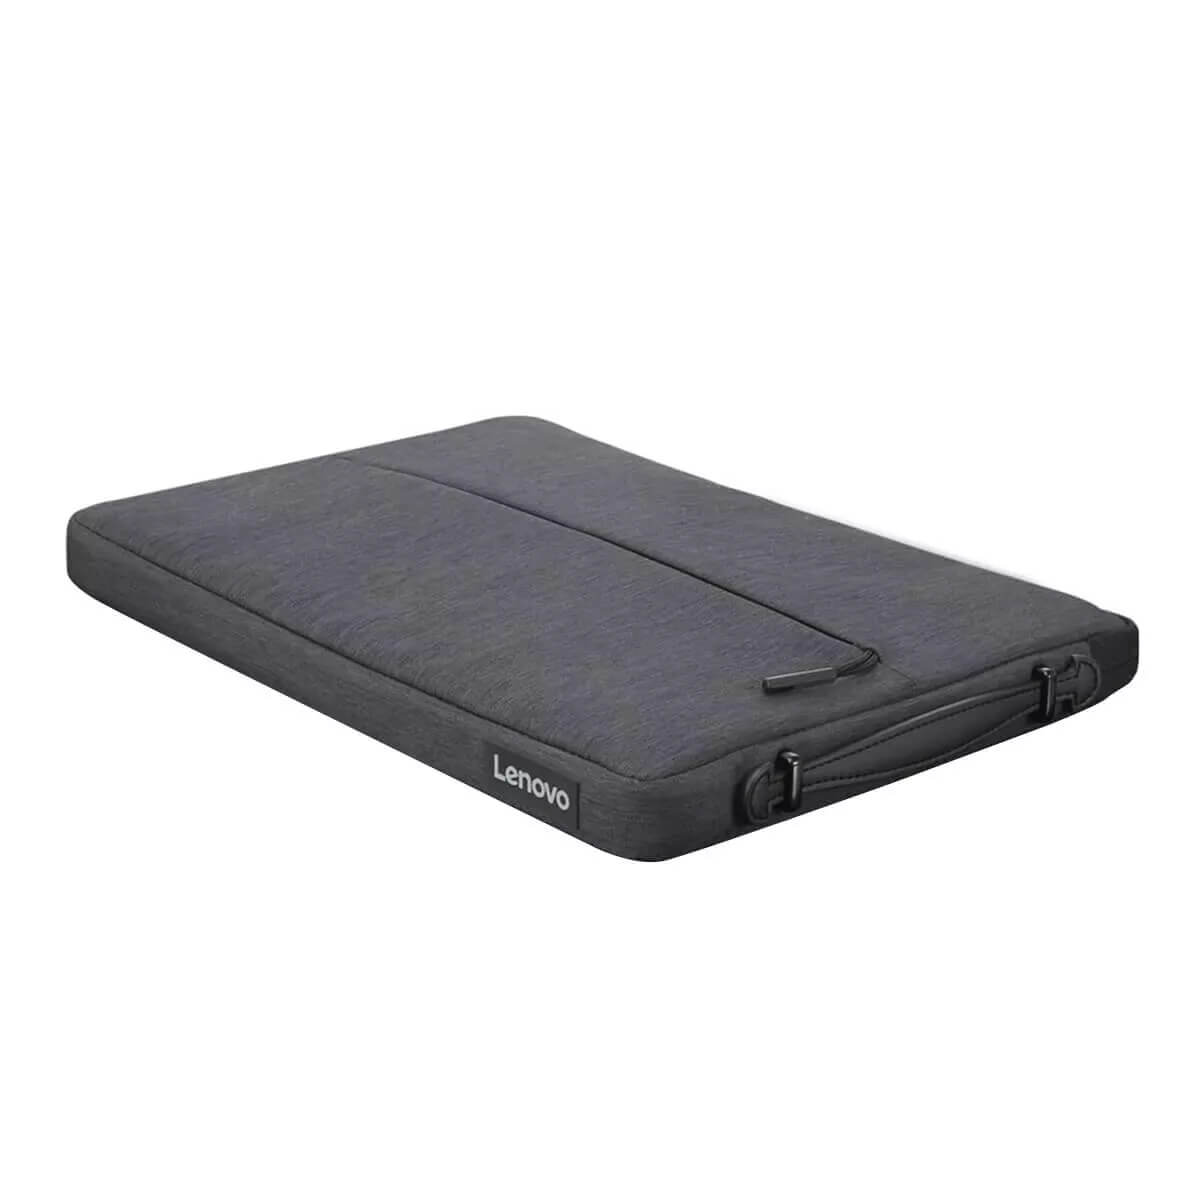 Lenovo 13 inch Laptop Urban Sleeve Case - Charcoal Gray